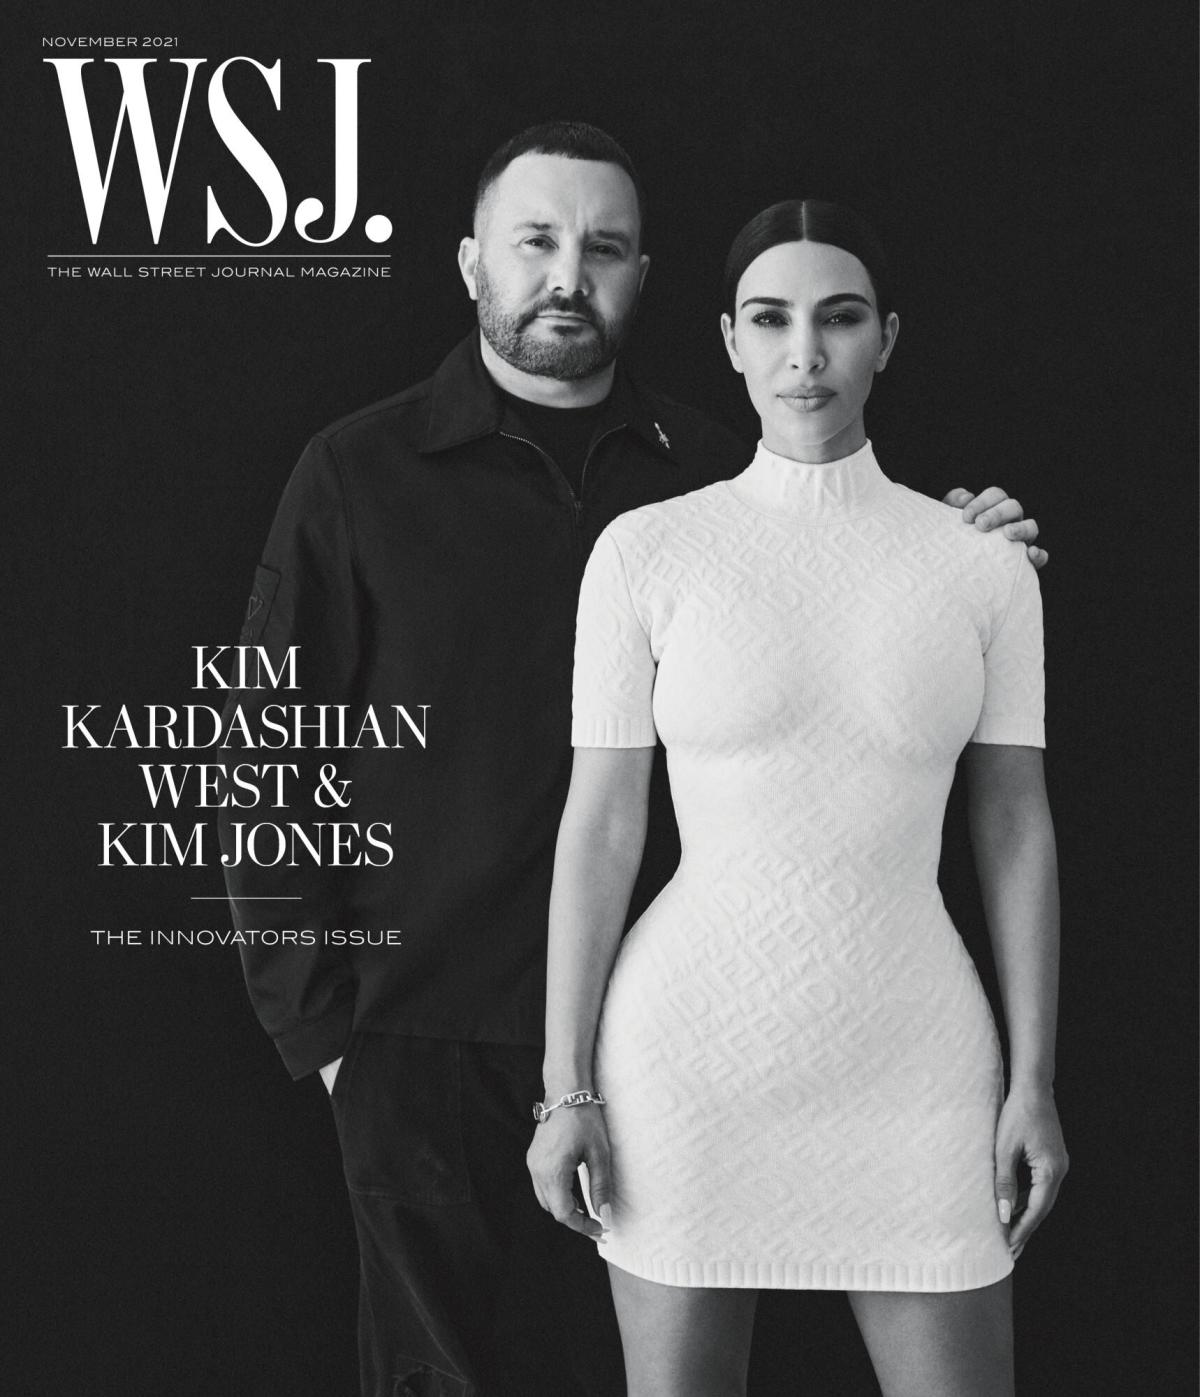 ProTrending on X: #KimKardashian's company #Skims announced new